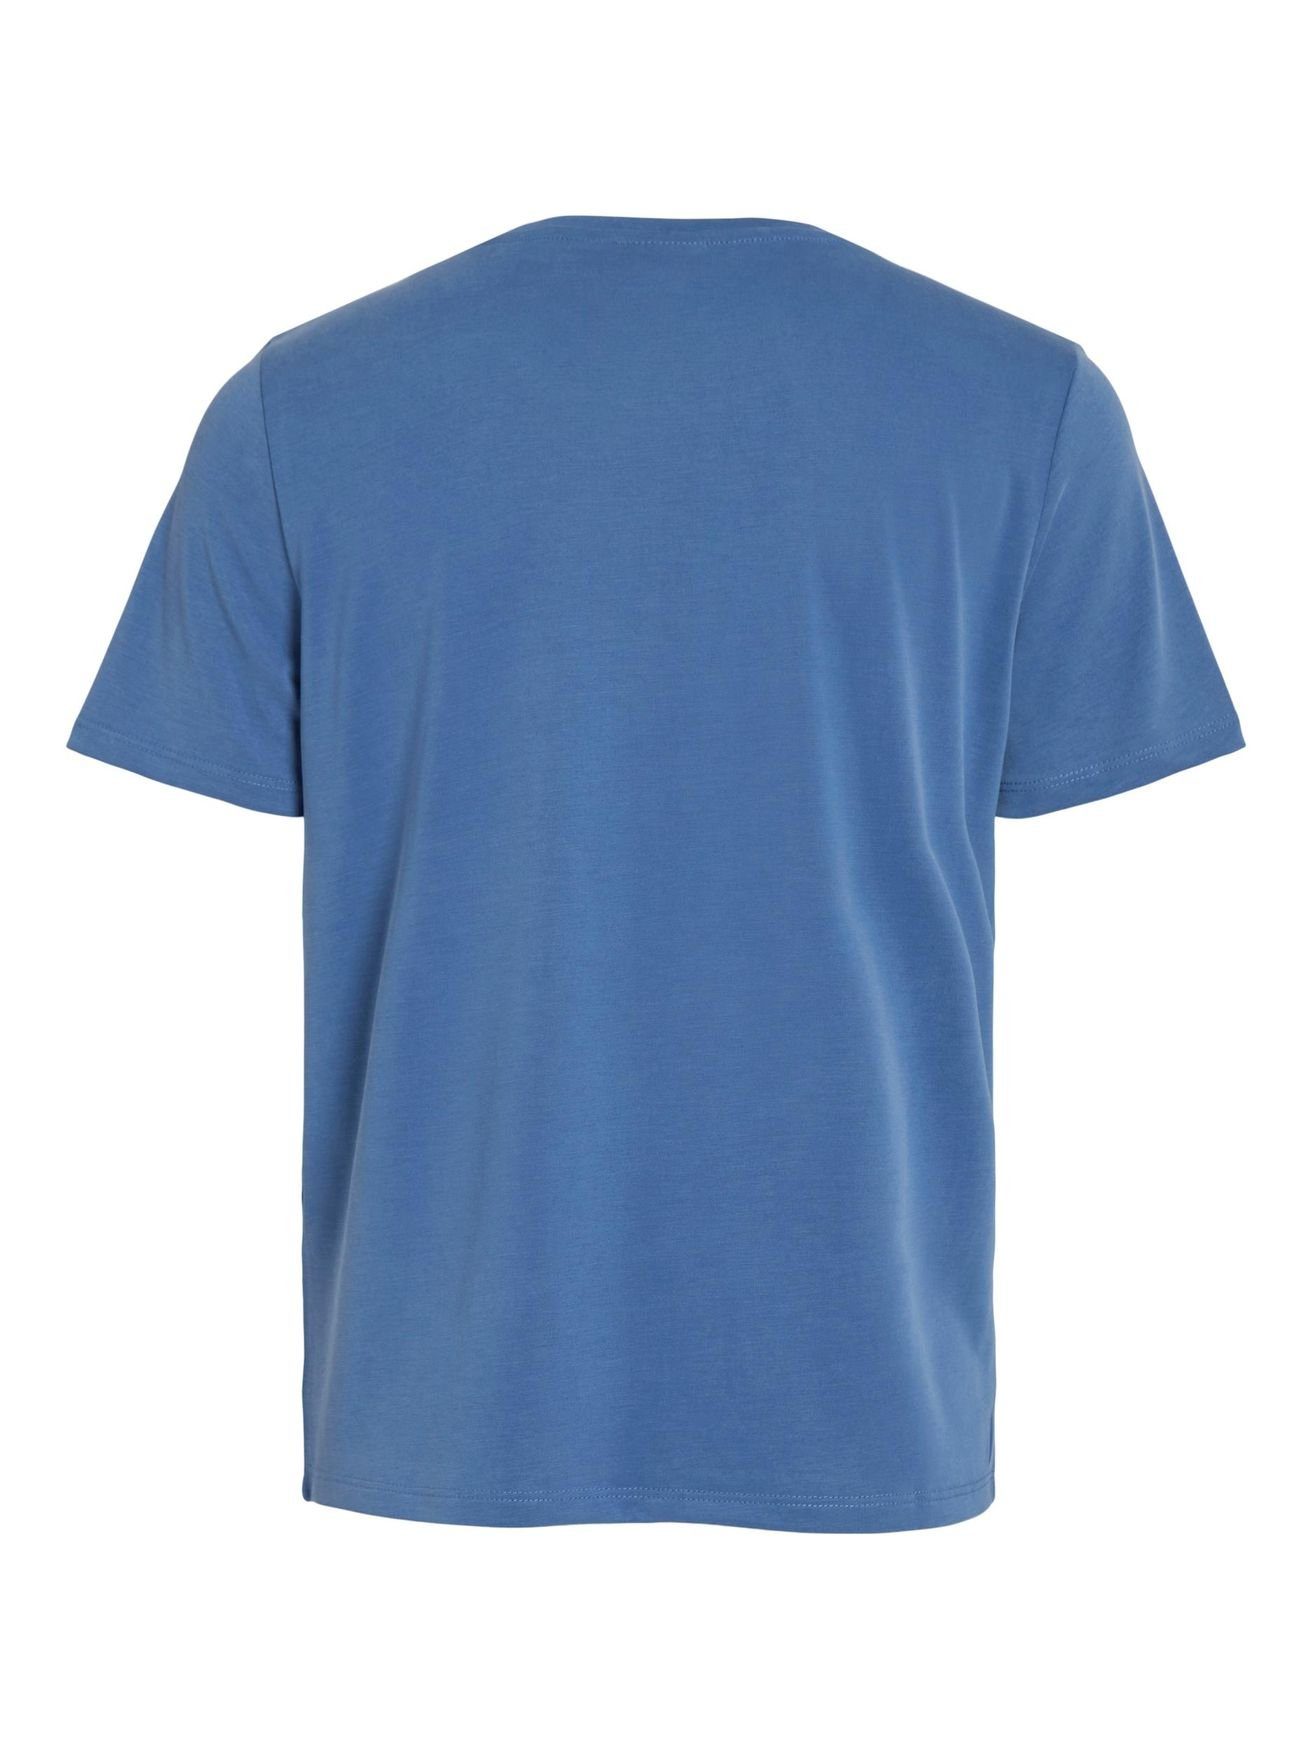 T-Shirt Blau Top T-Shirt Vila Oberteil Basic in Rundhals VIMODALA Kurzarm 4870